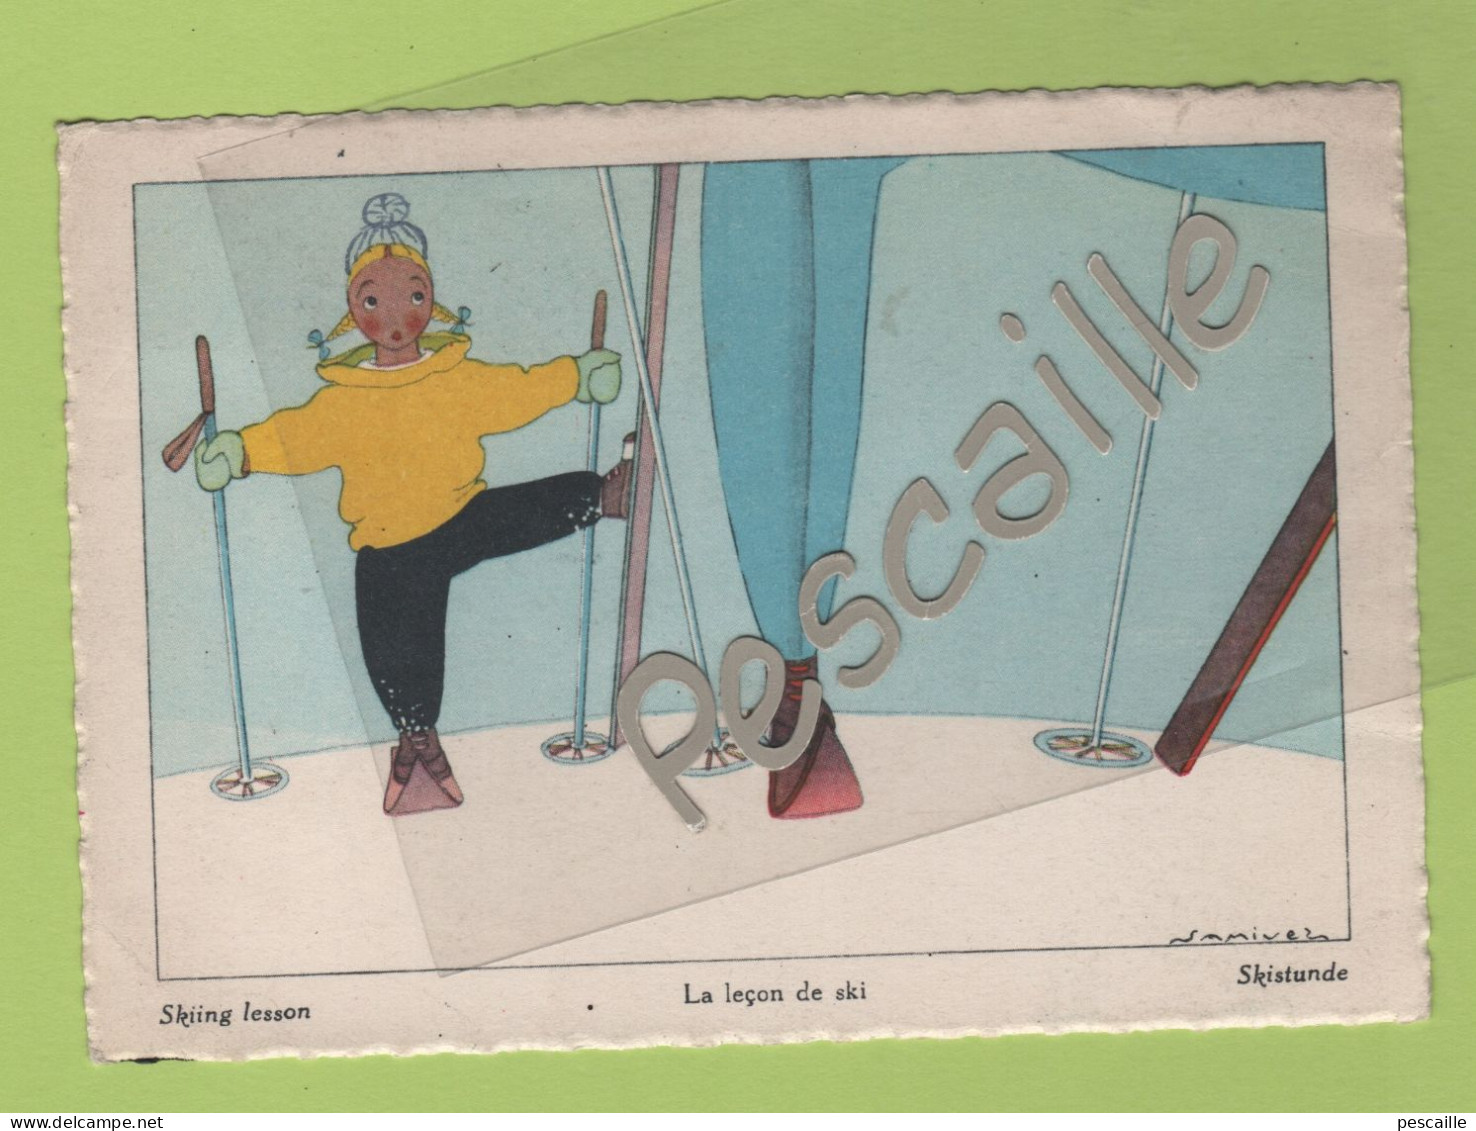 CP ILLUSTRATEUR SAMIVEL - SKIING LESSON / LA LECON DE SKI / SKISTUNDE - EDITIONS EFPE CHAMBERY - CIRCULEE EN 1955 - Samivel